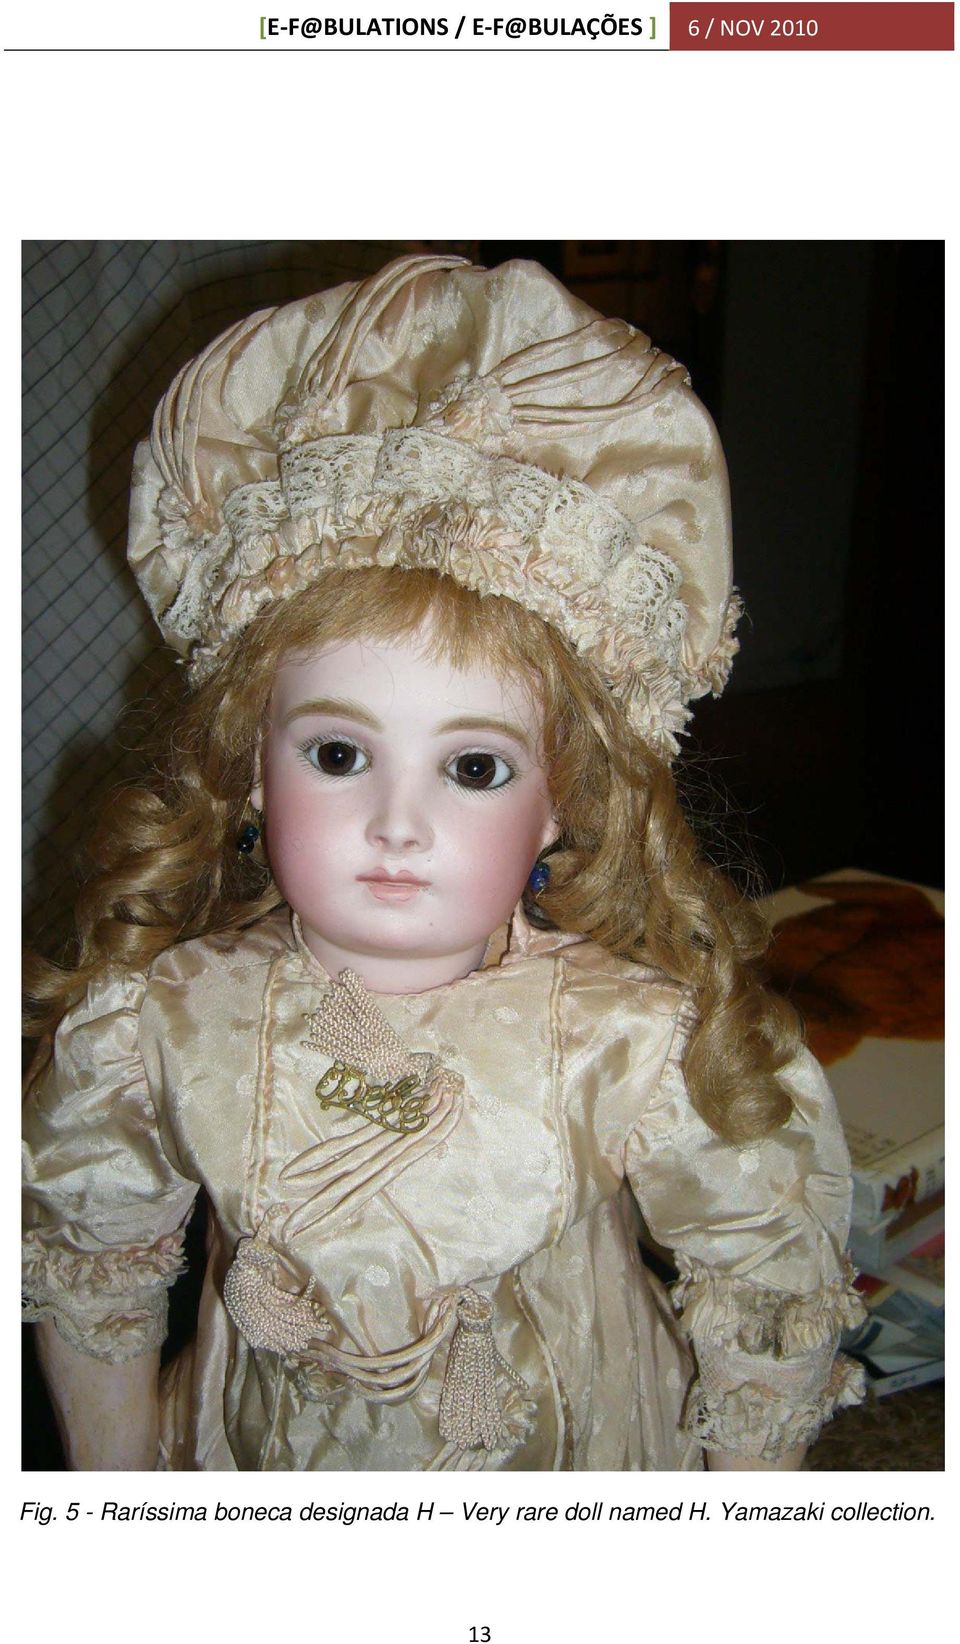 Very rare doll named